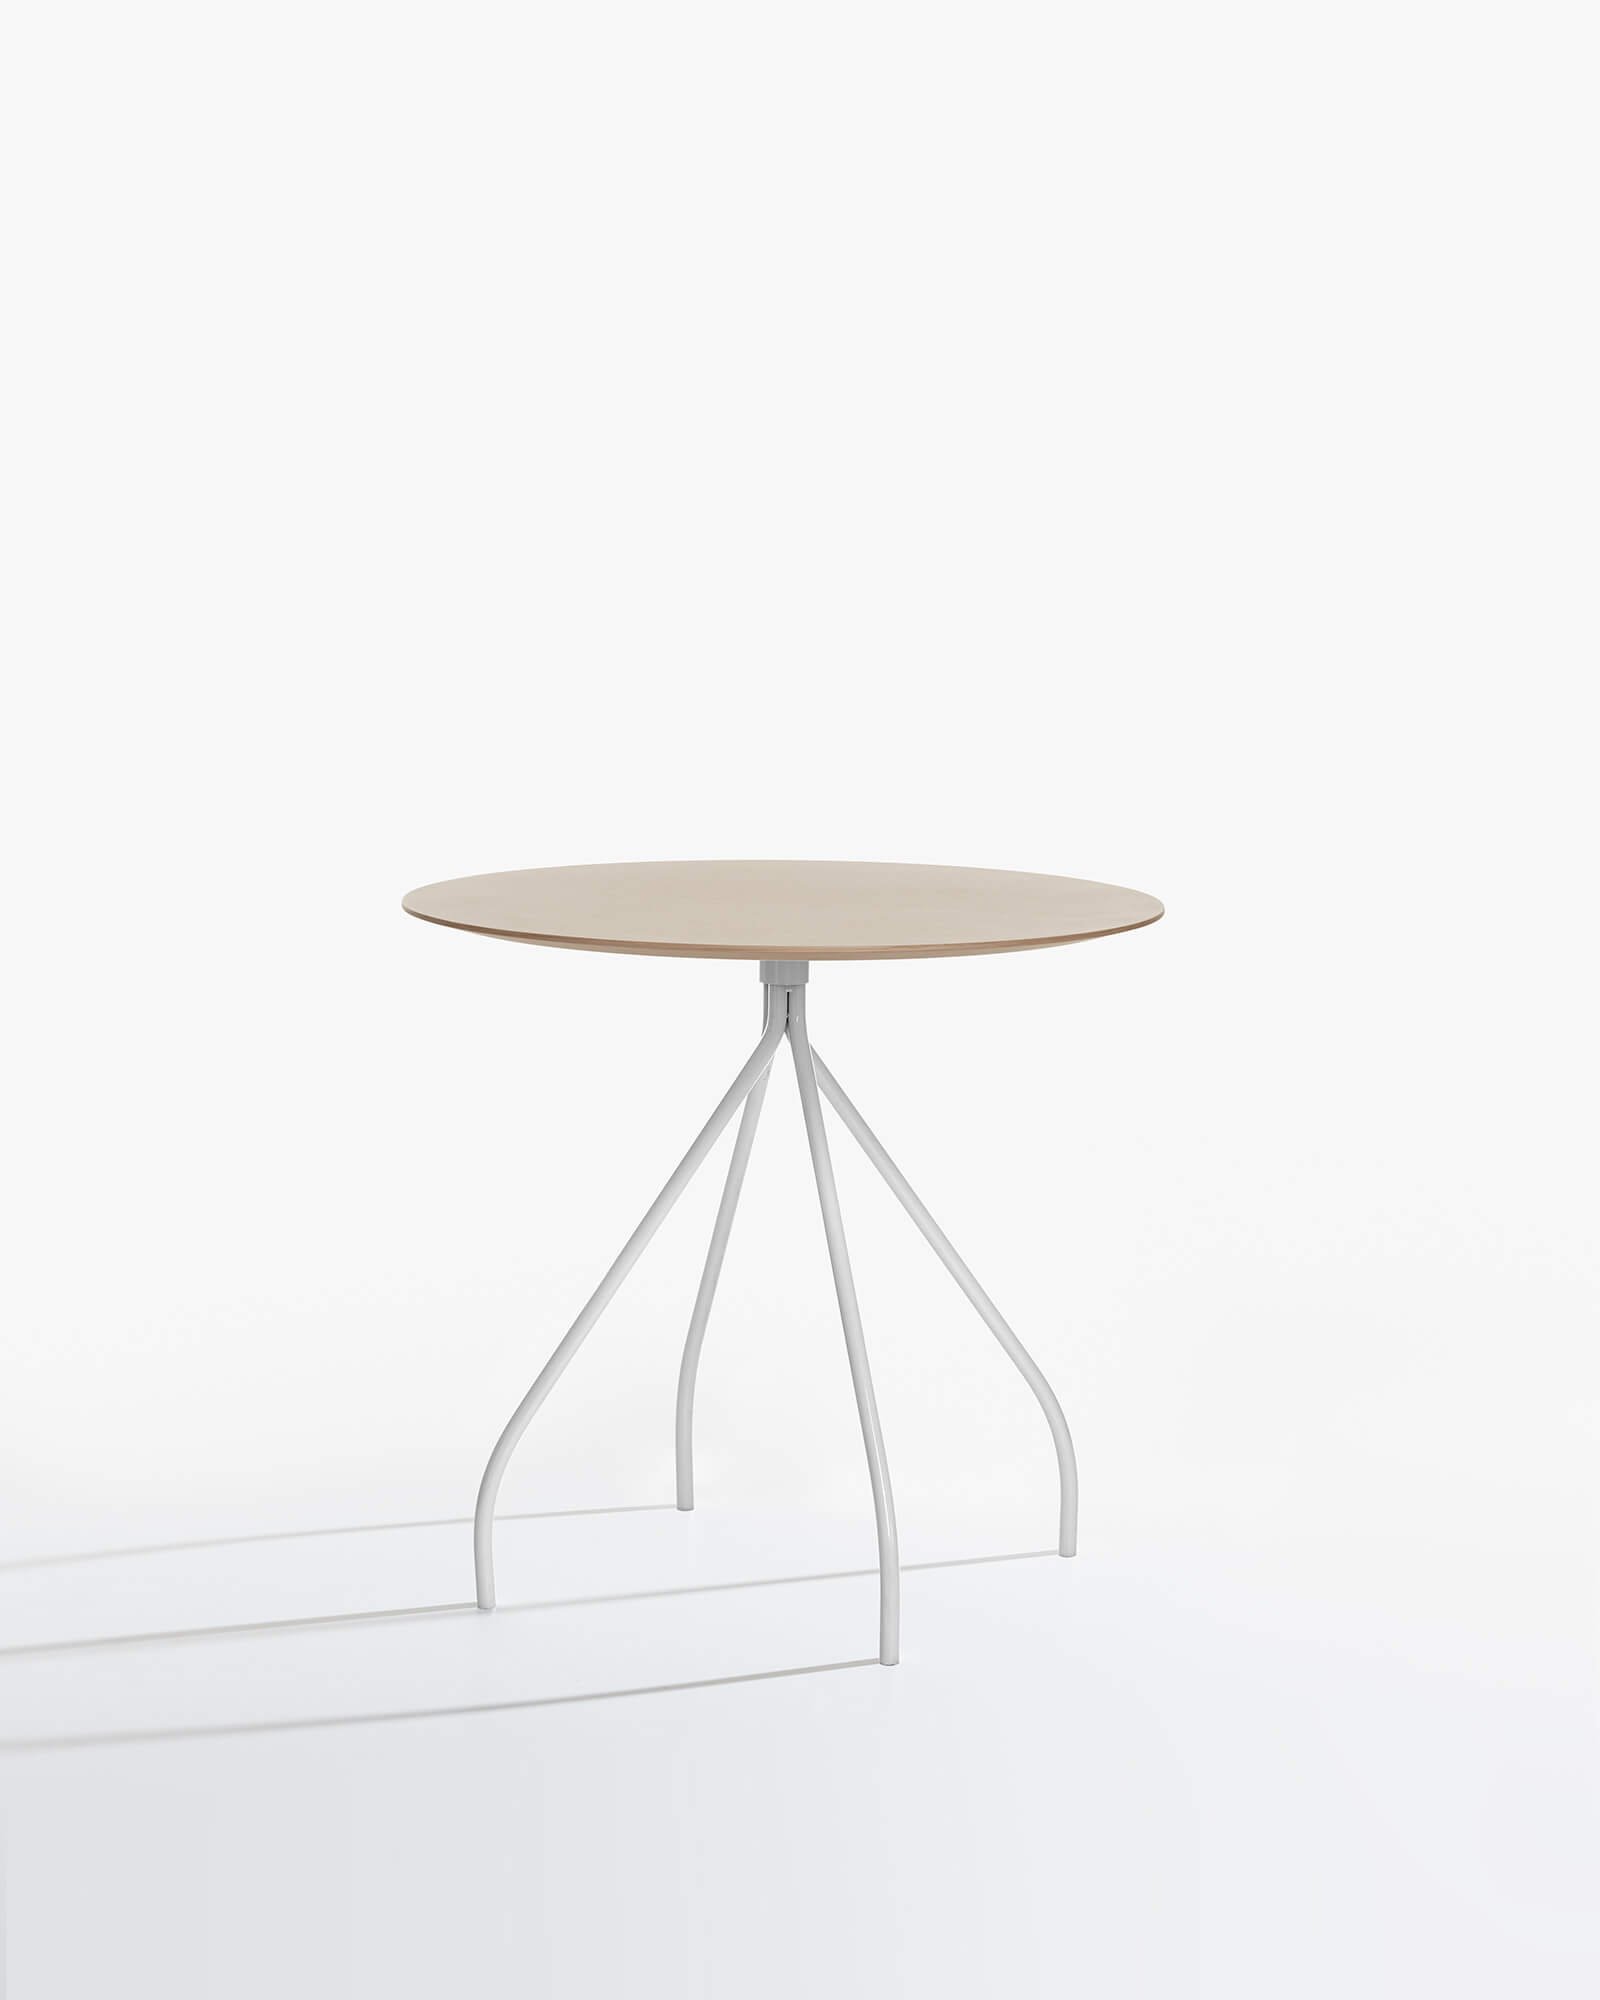 IOCprojectpartners_Cordusio-table_Design-by-Raffaella-Mangiarotti_Ph-Miro-Zagnoli-01.jpg